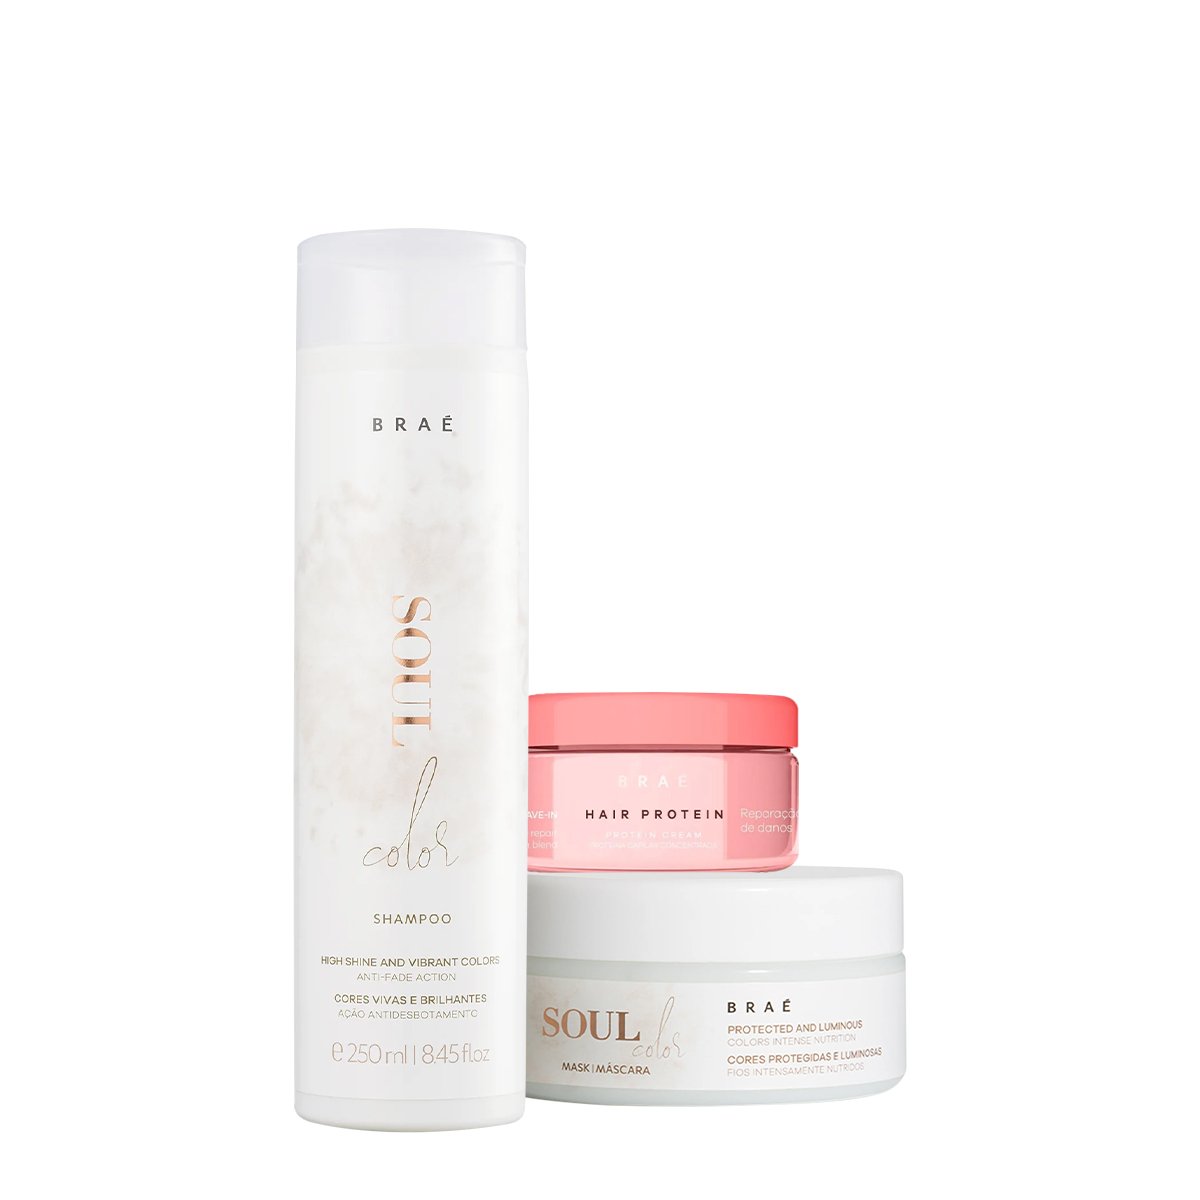 Kit Brae Soul Color Shampoo Mascara e Hair Protein (3 produtos) ÚNICO 1